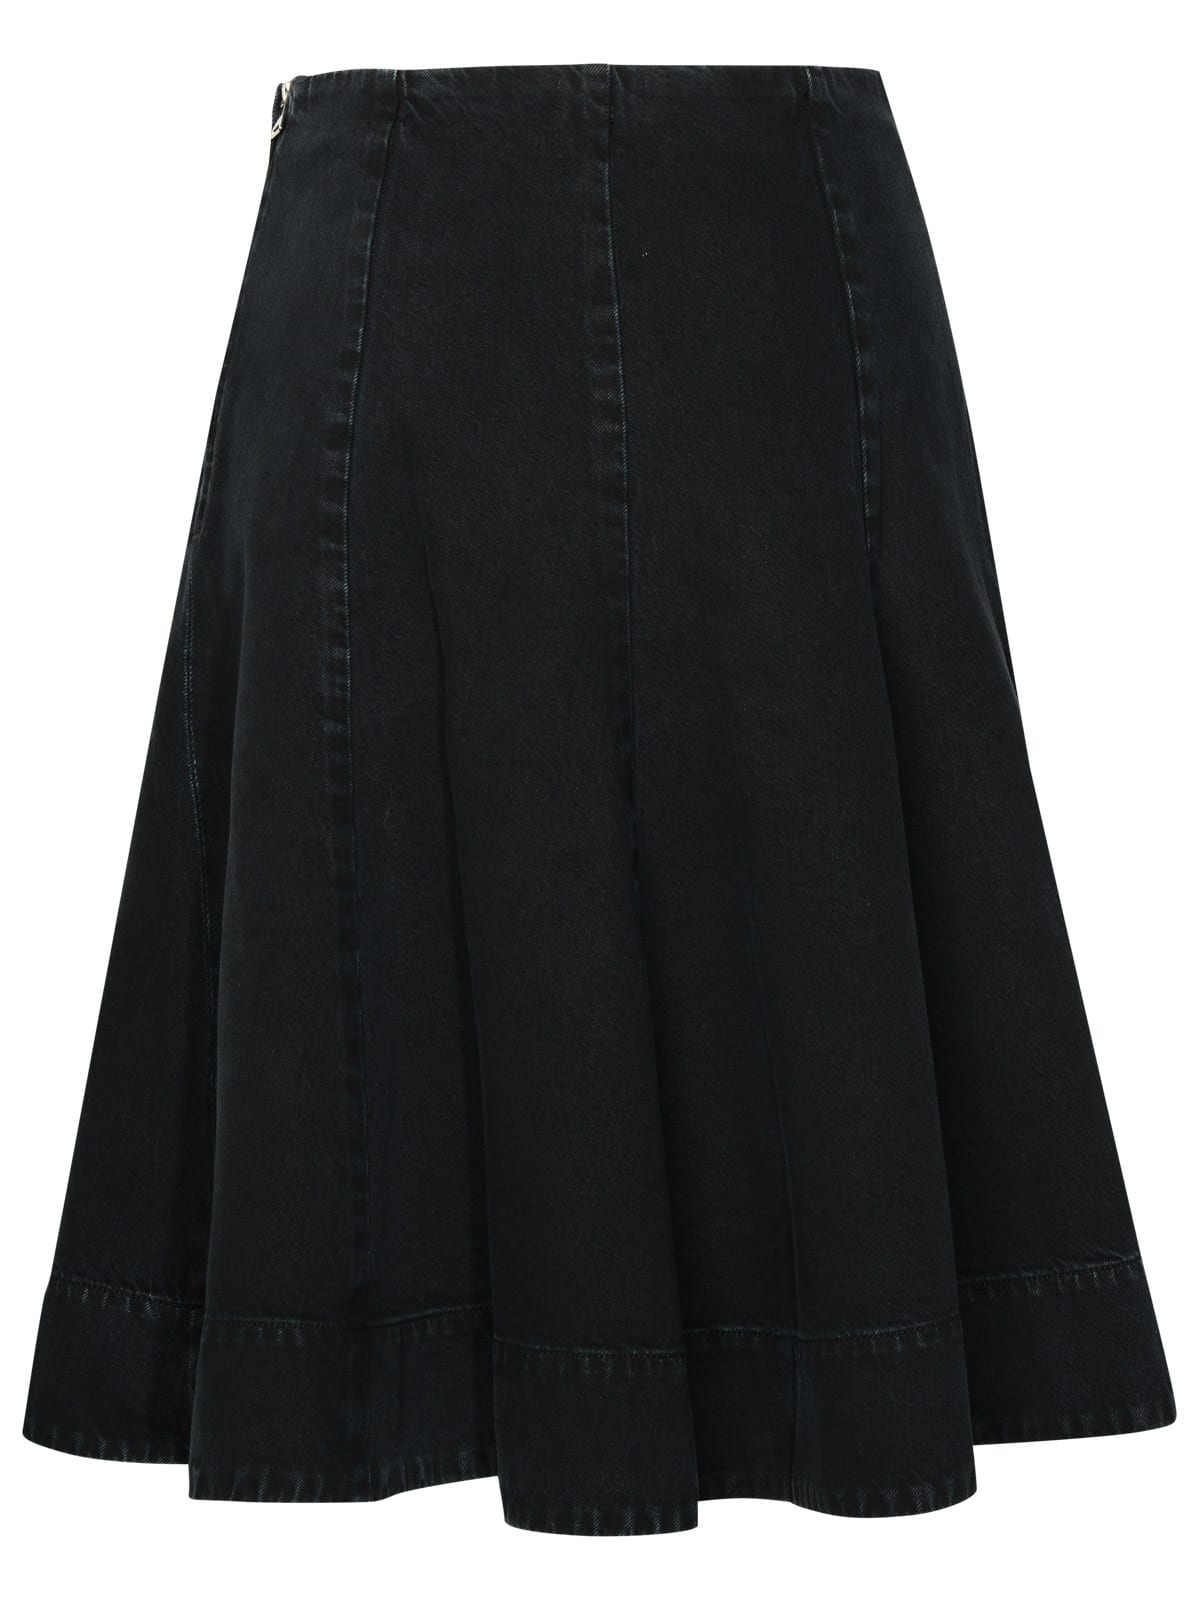 Shop Khaite Black Cotton Blend Skirt